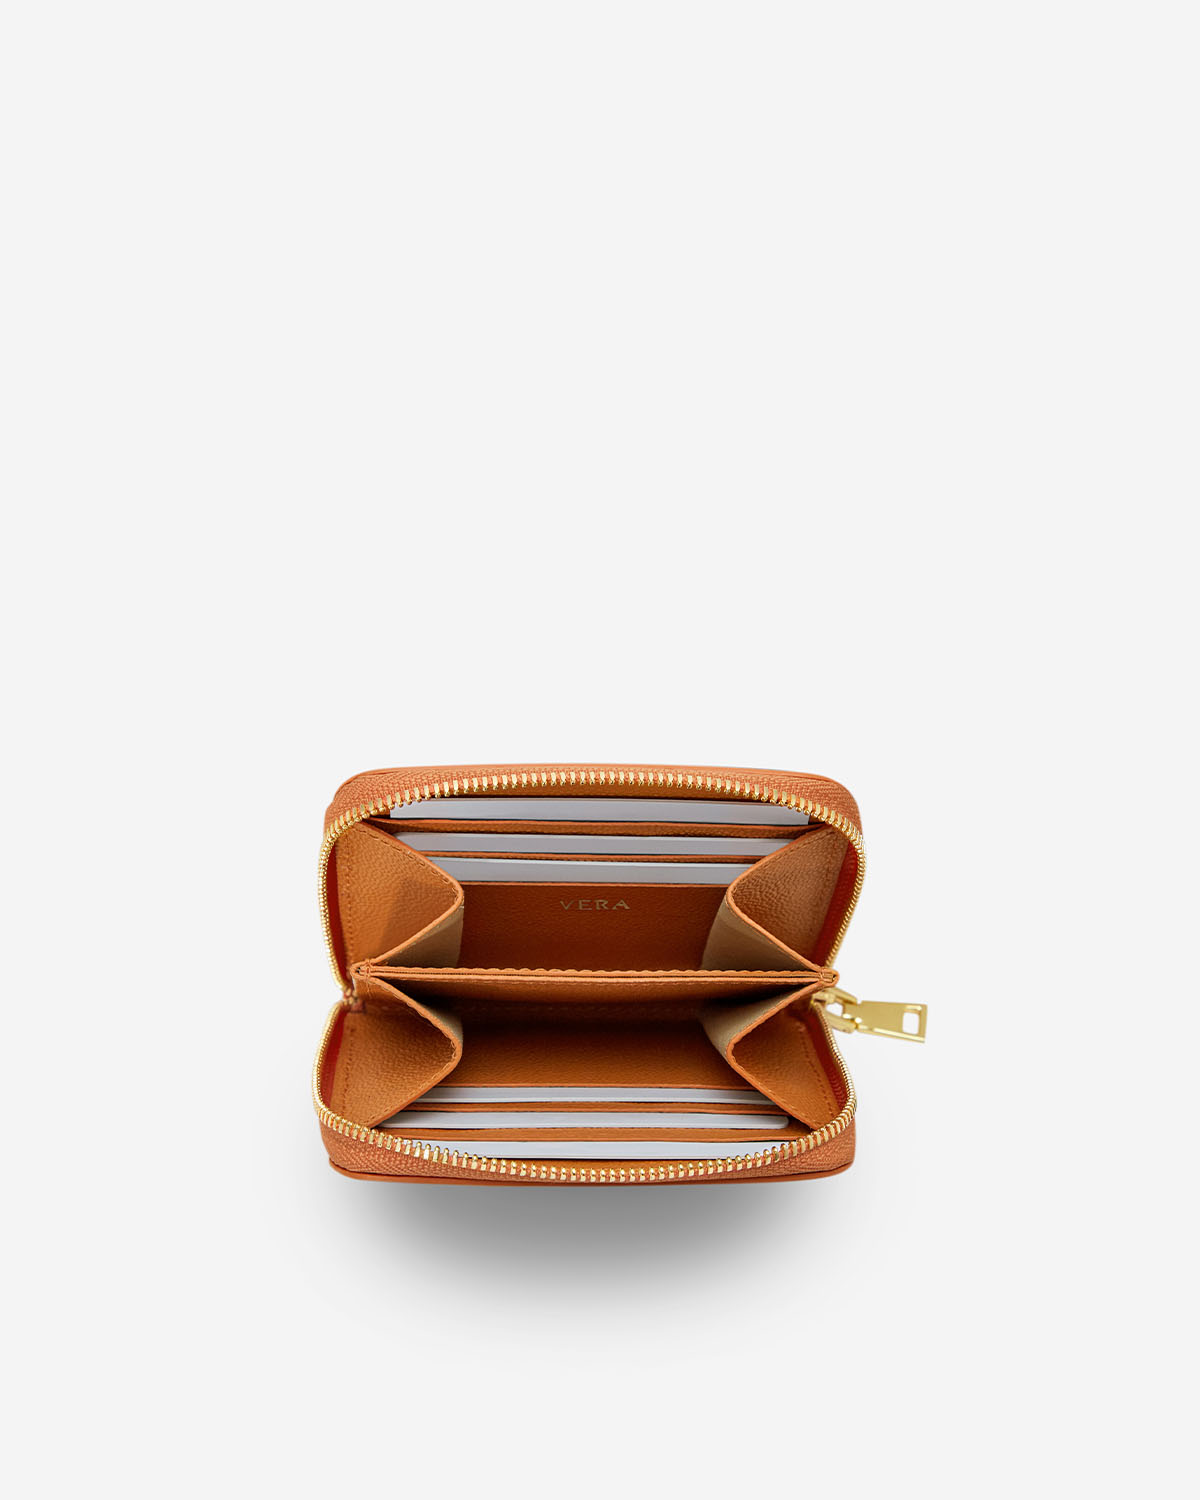 VERA CAVIAR Zipped Wallet in Orange H กระเป๋าสตางค์ซิปรอบ อยู่ทรงสวย ทำจากหนังแท้ลาย Caviar สี Orange H